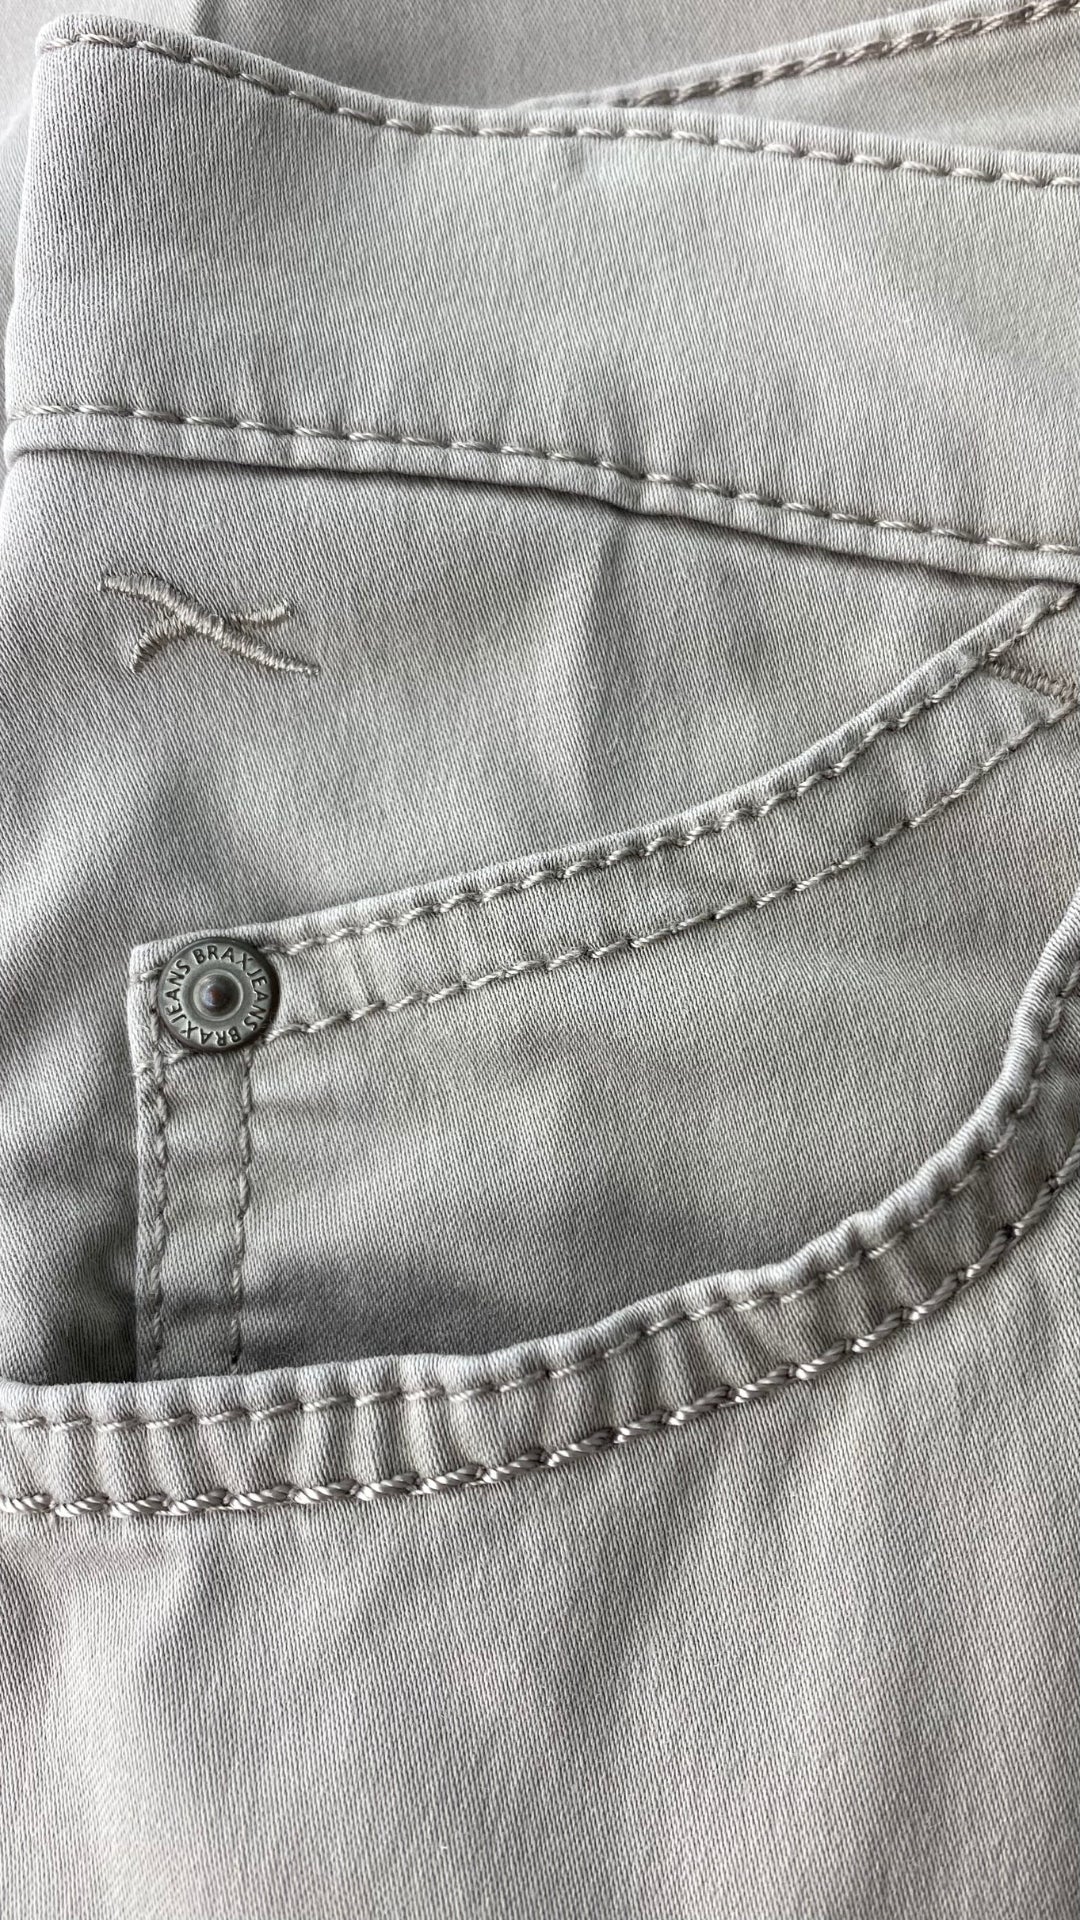 Pantalon taupe coupe droite, marque Brax, taille 27. Vue de la poche.